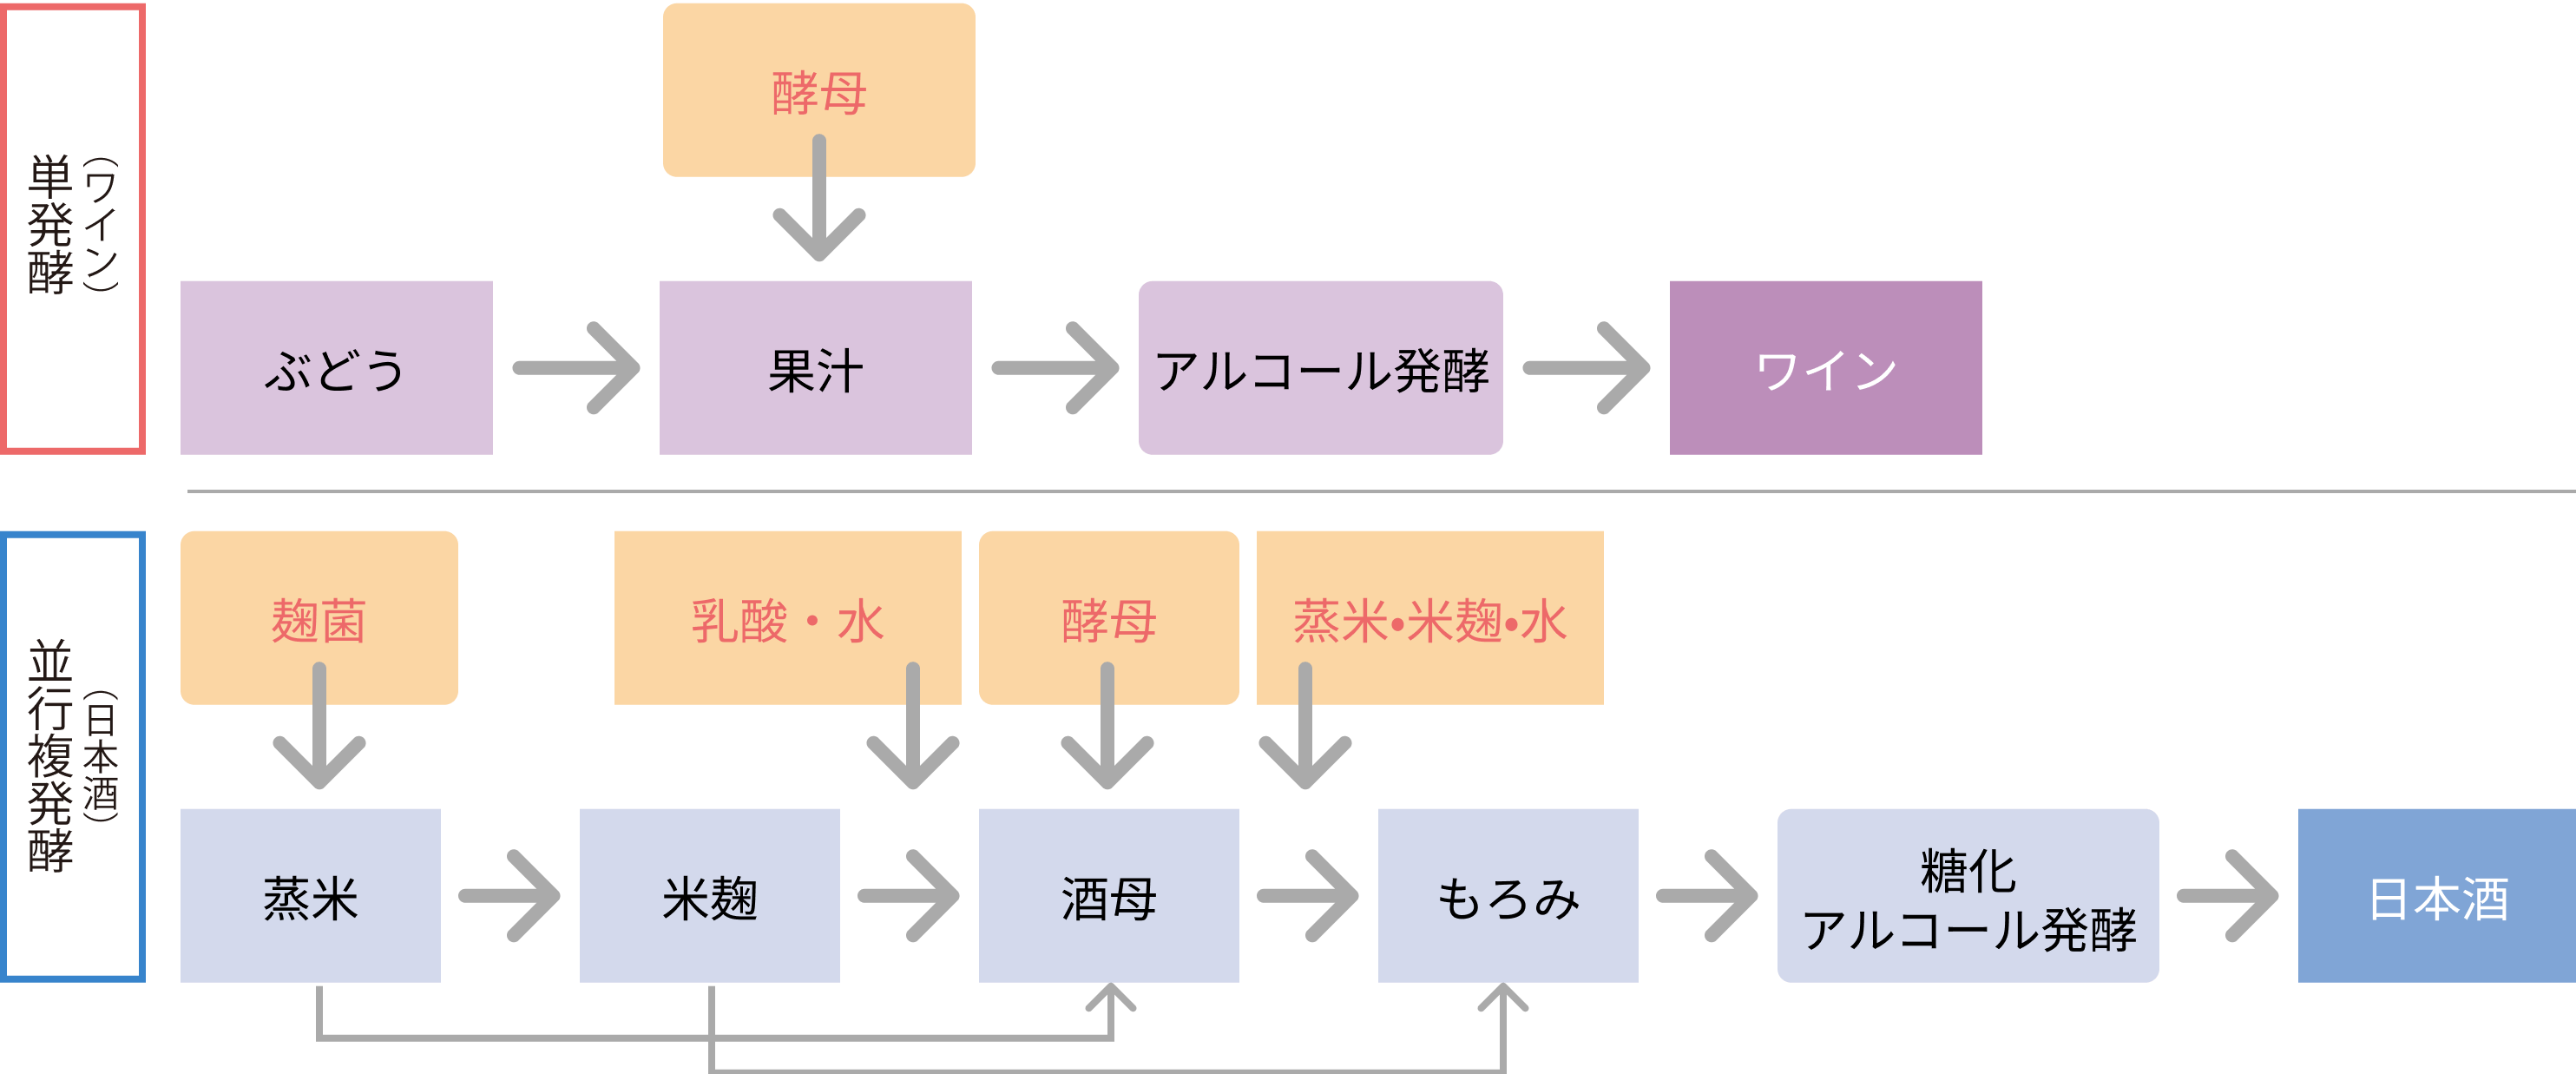 図8. 単発酵と並行複発酵